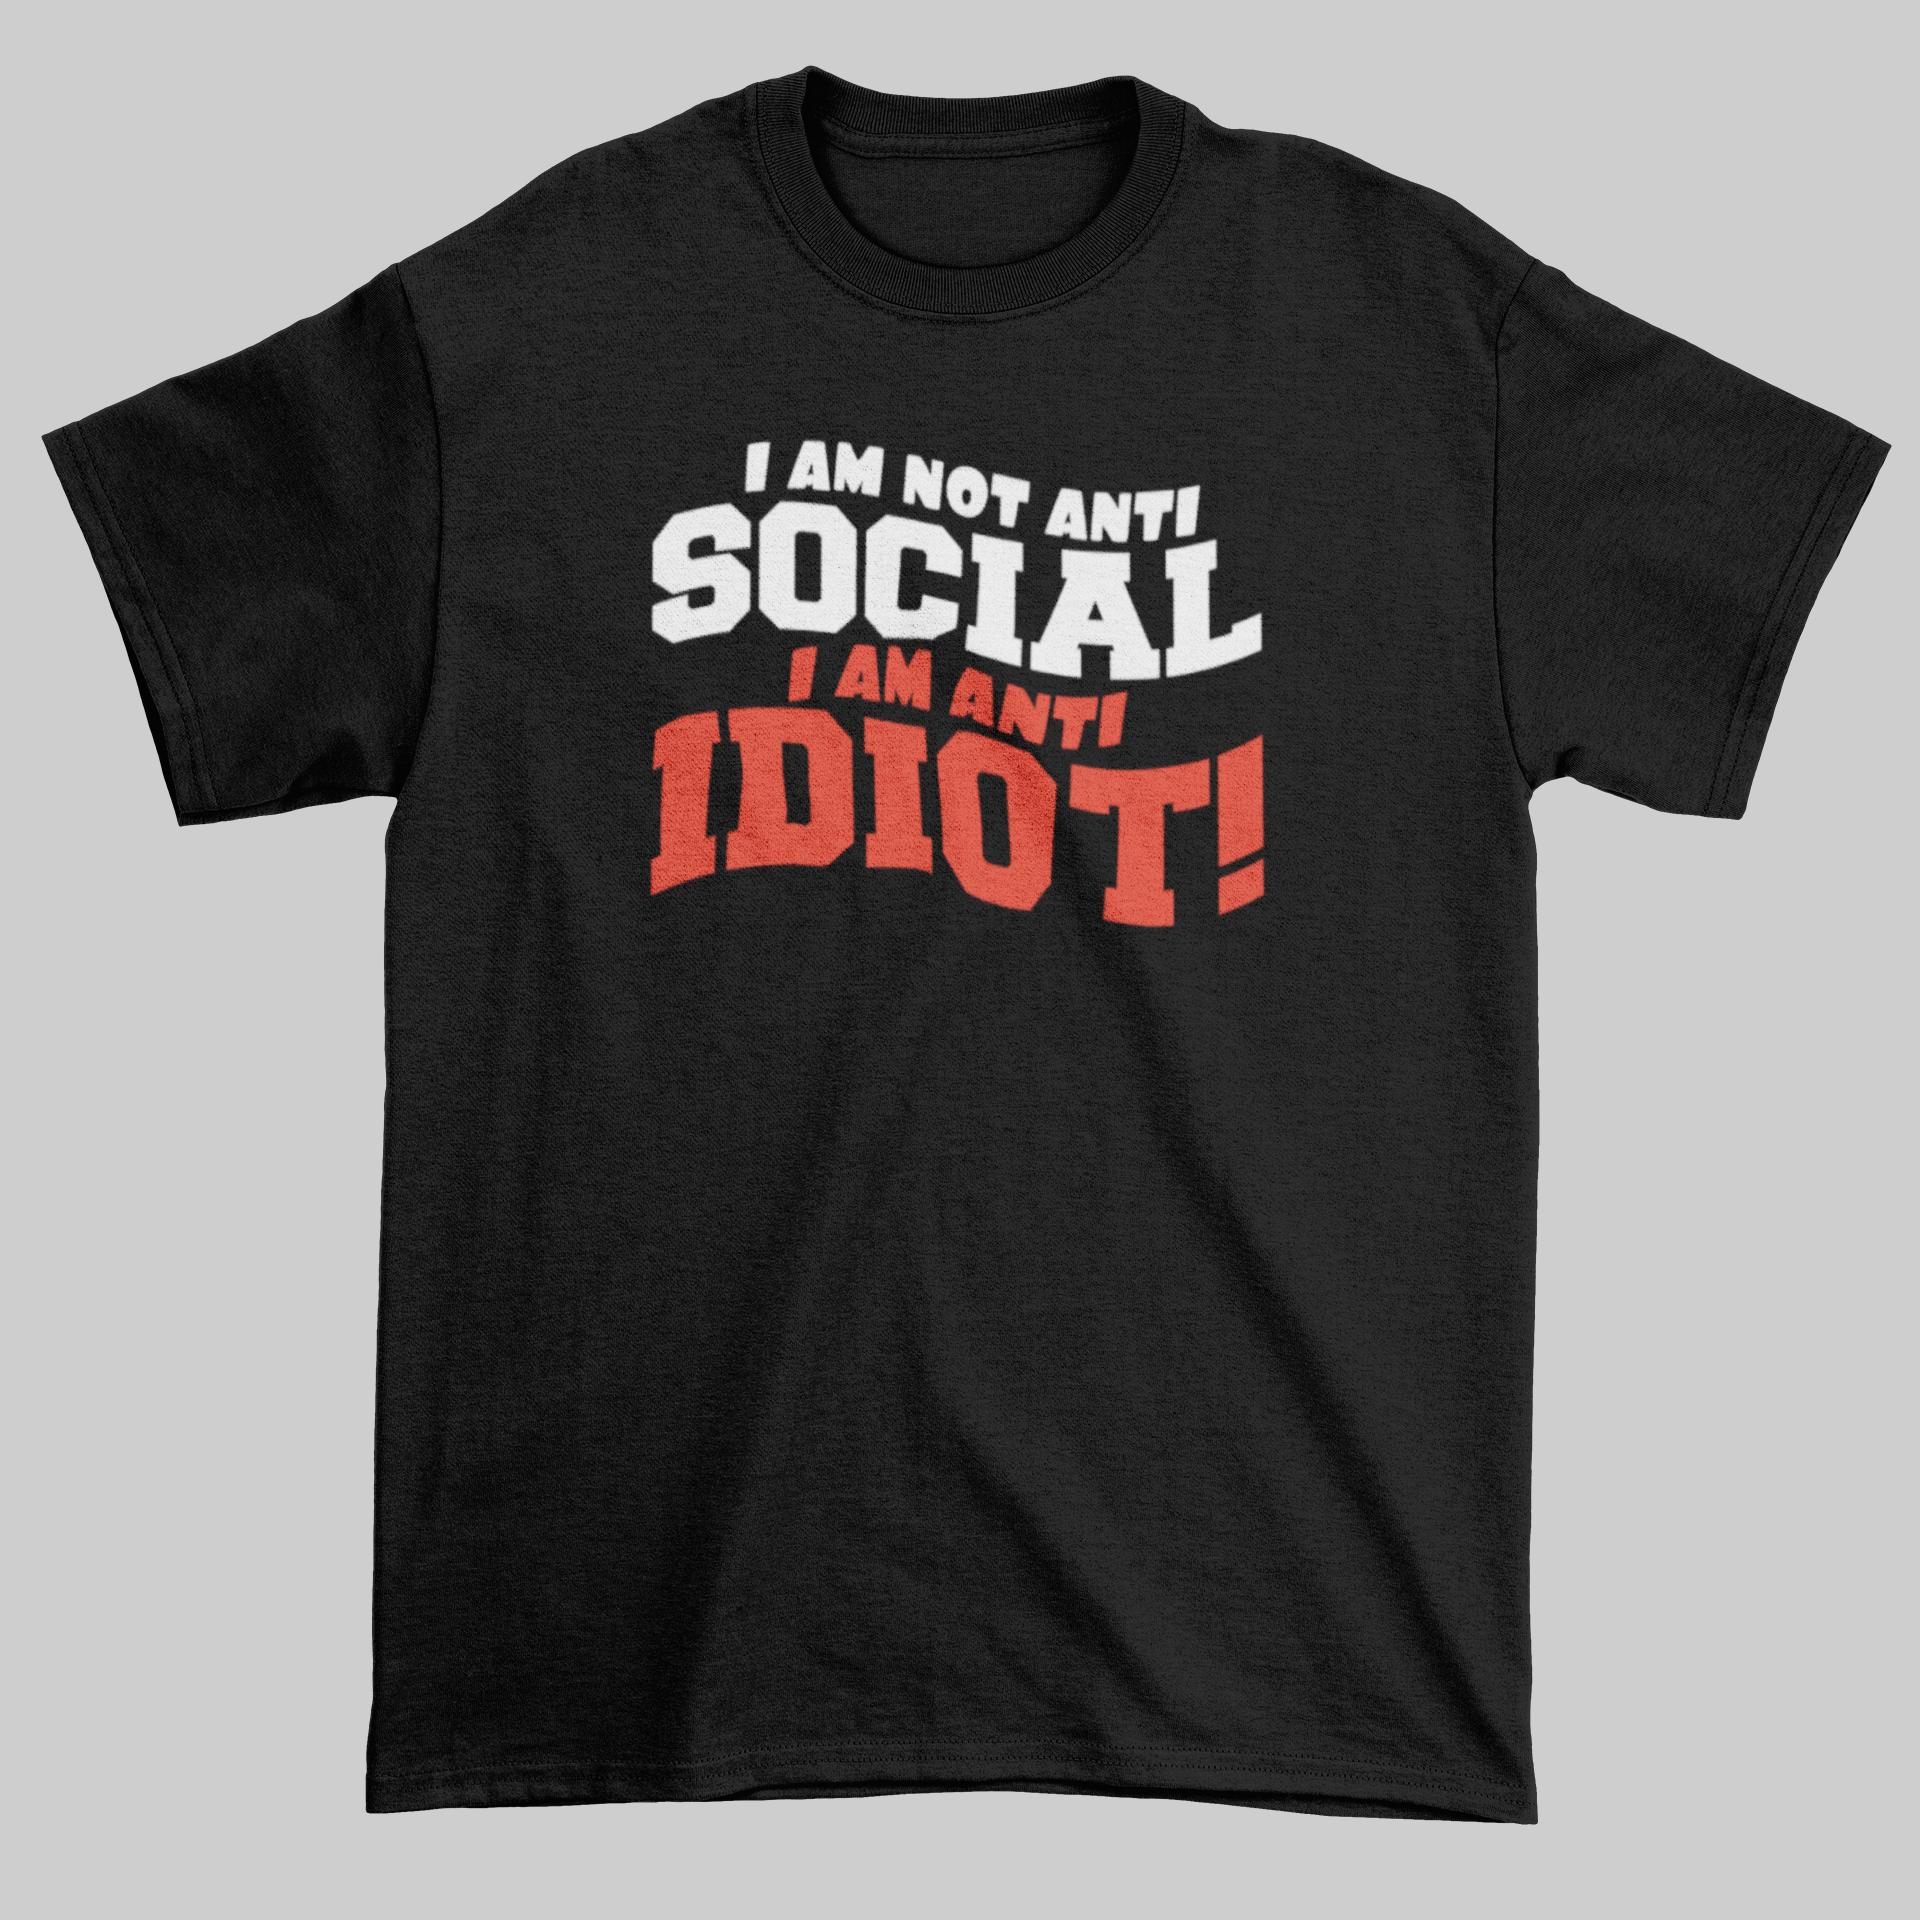 I Am Not Anti Social - I Am Anti Idiot - Jay's Custom Prints